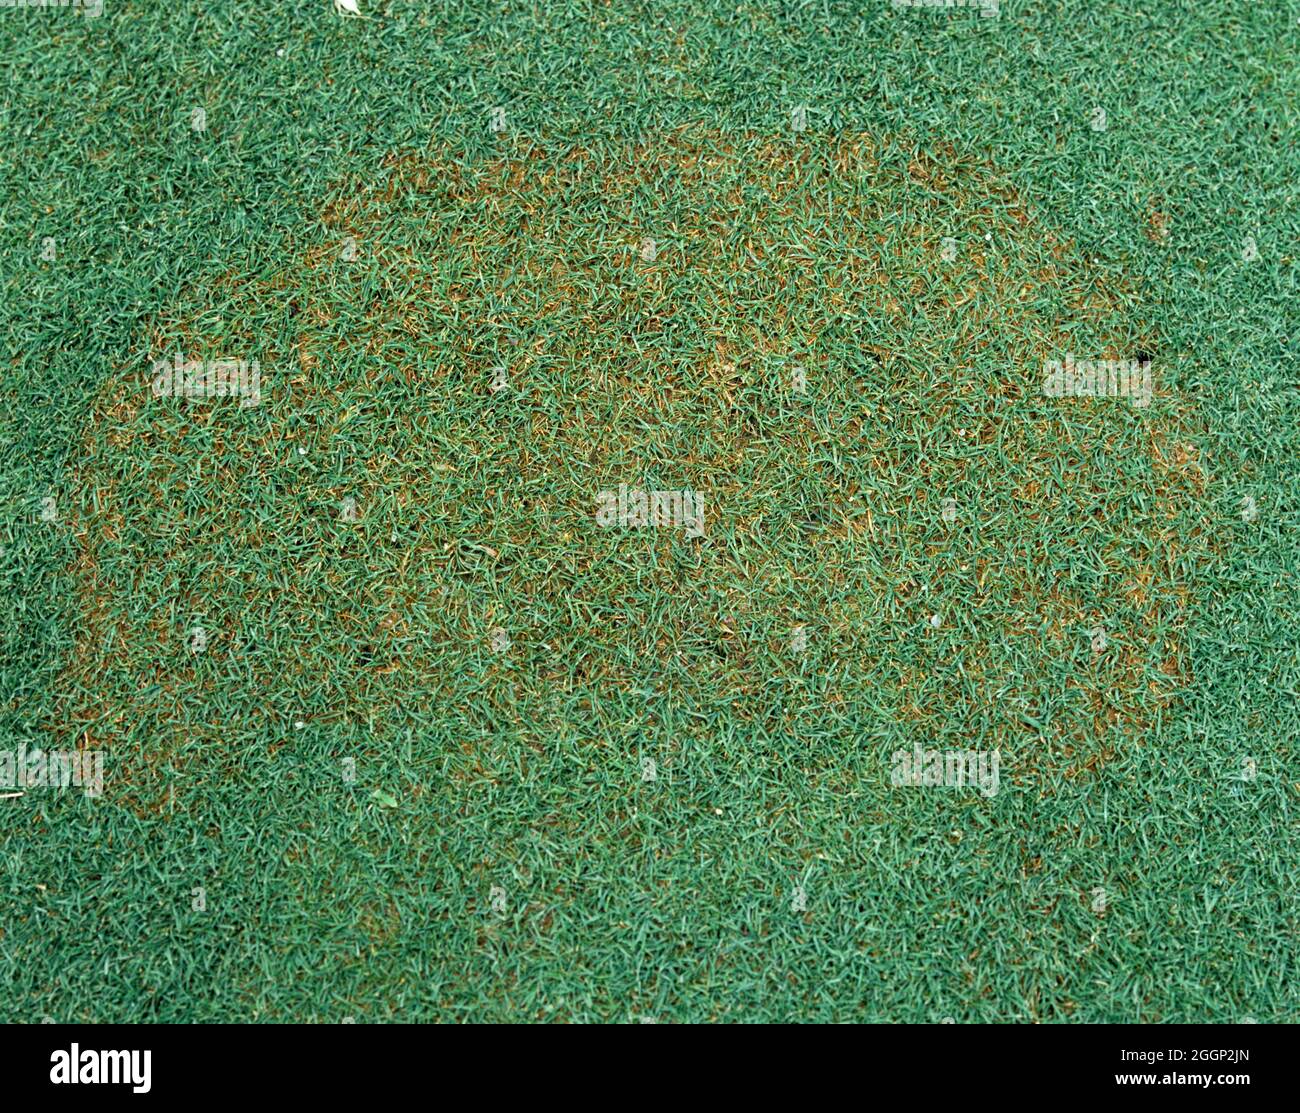 Rhizoctonia Brown Patch (Rhizoctonia solani) Pilzkrankheit infizierten Bereich in der Nähe gemäht kurzen Golf grünen Turfgras, USA Stockfoto